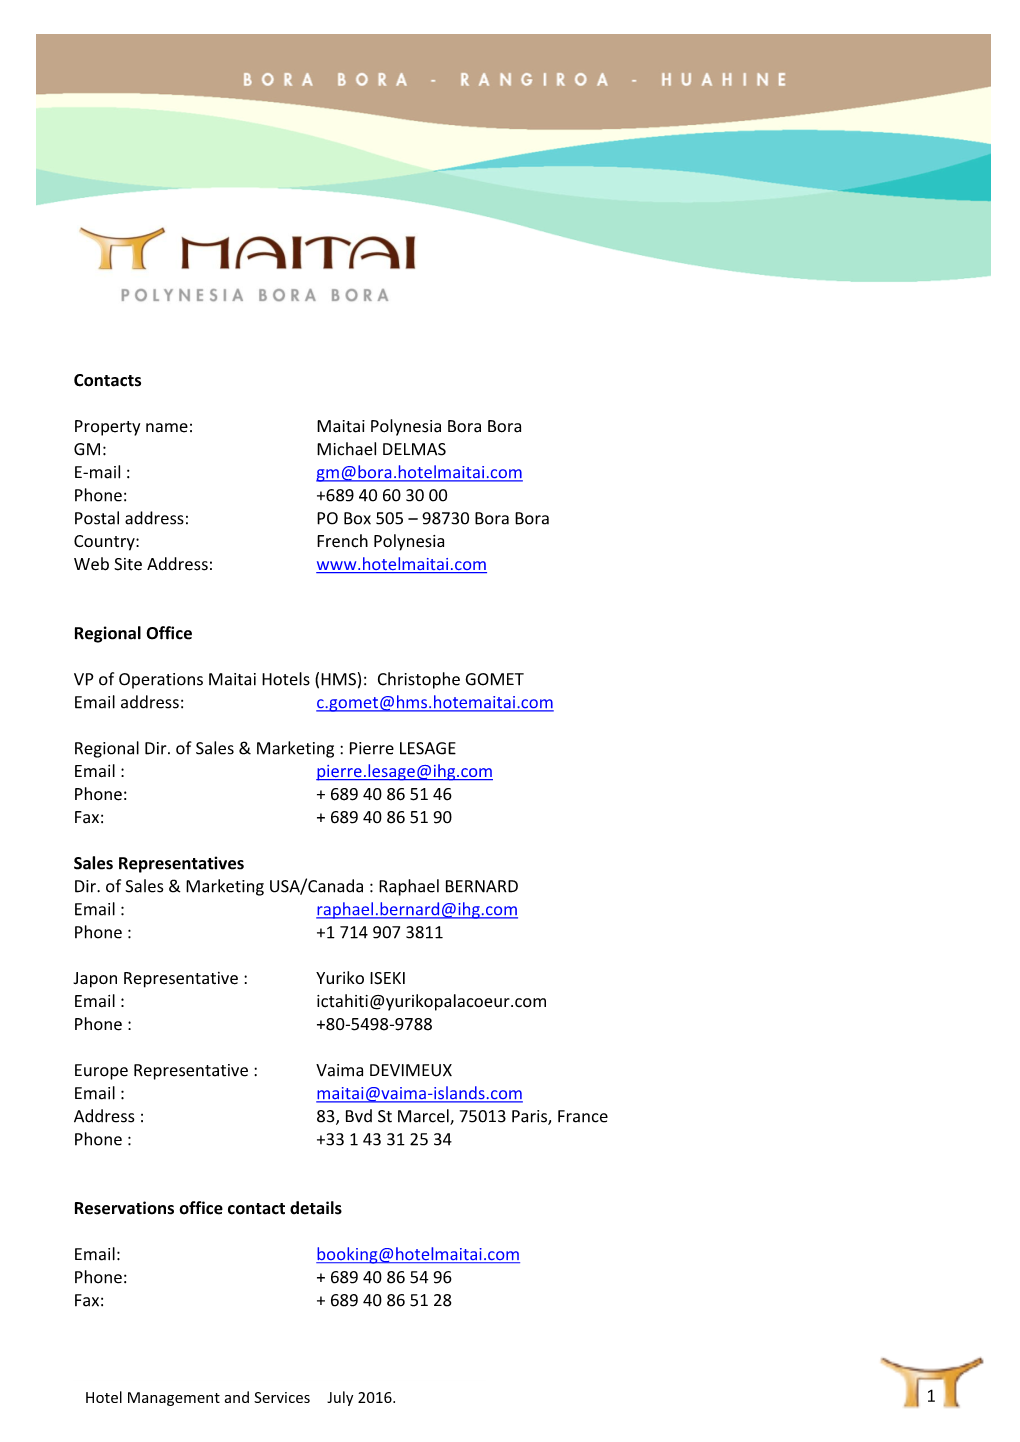 Gm@Bora.Hotelmaitai.Com Phone: +689 40 60 30 00 Postal Address: PO Box 505 – 98730 Bora Bora Country: French Polynesia Web Site Address